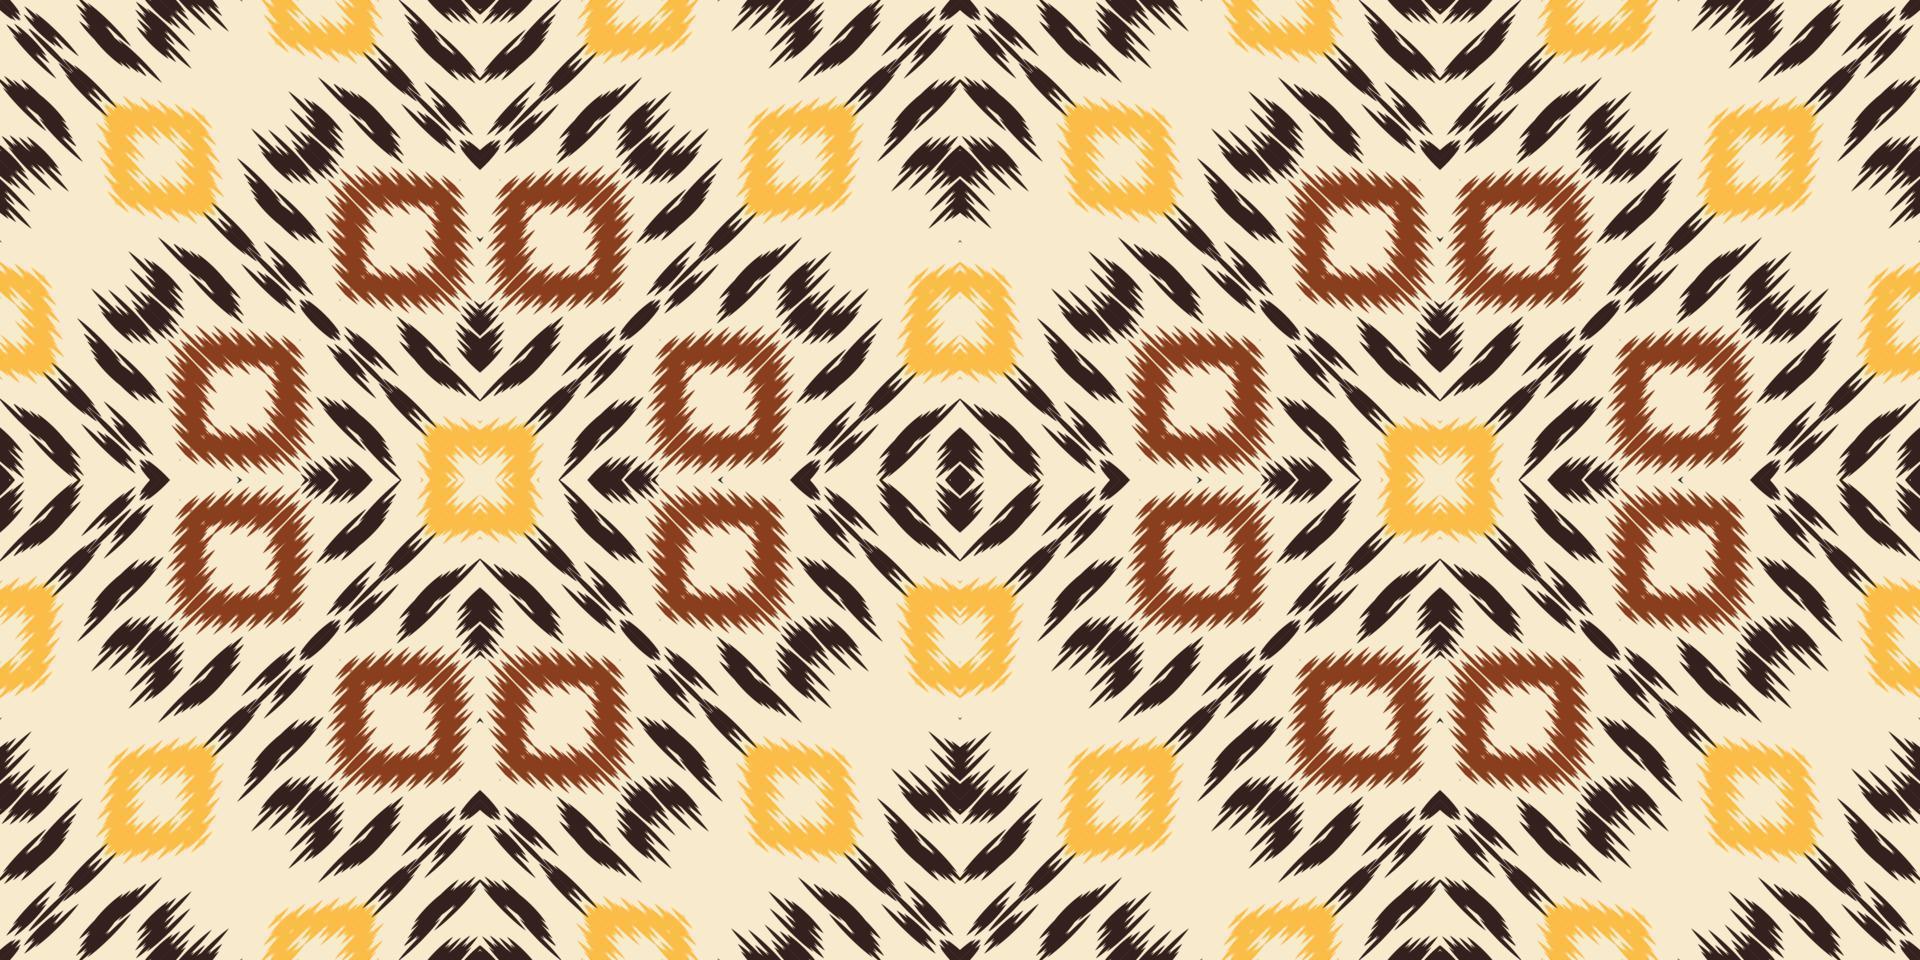 ikat puntos patrón sin fisuras de África tribal. étnico geométrico ikkat batik vector digital diseño textil para estampados tela sari mughal cepillo símbolo franjas textura kurti kurtis kurtas